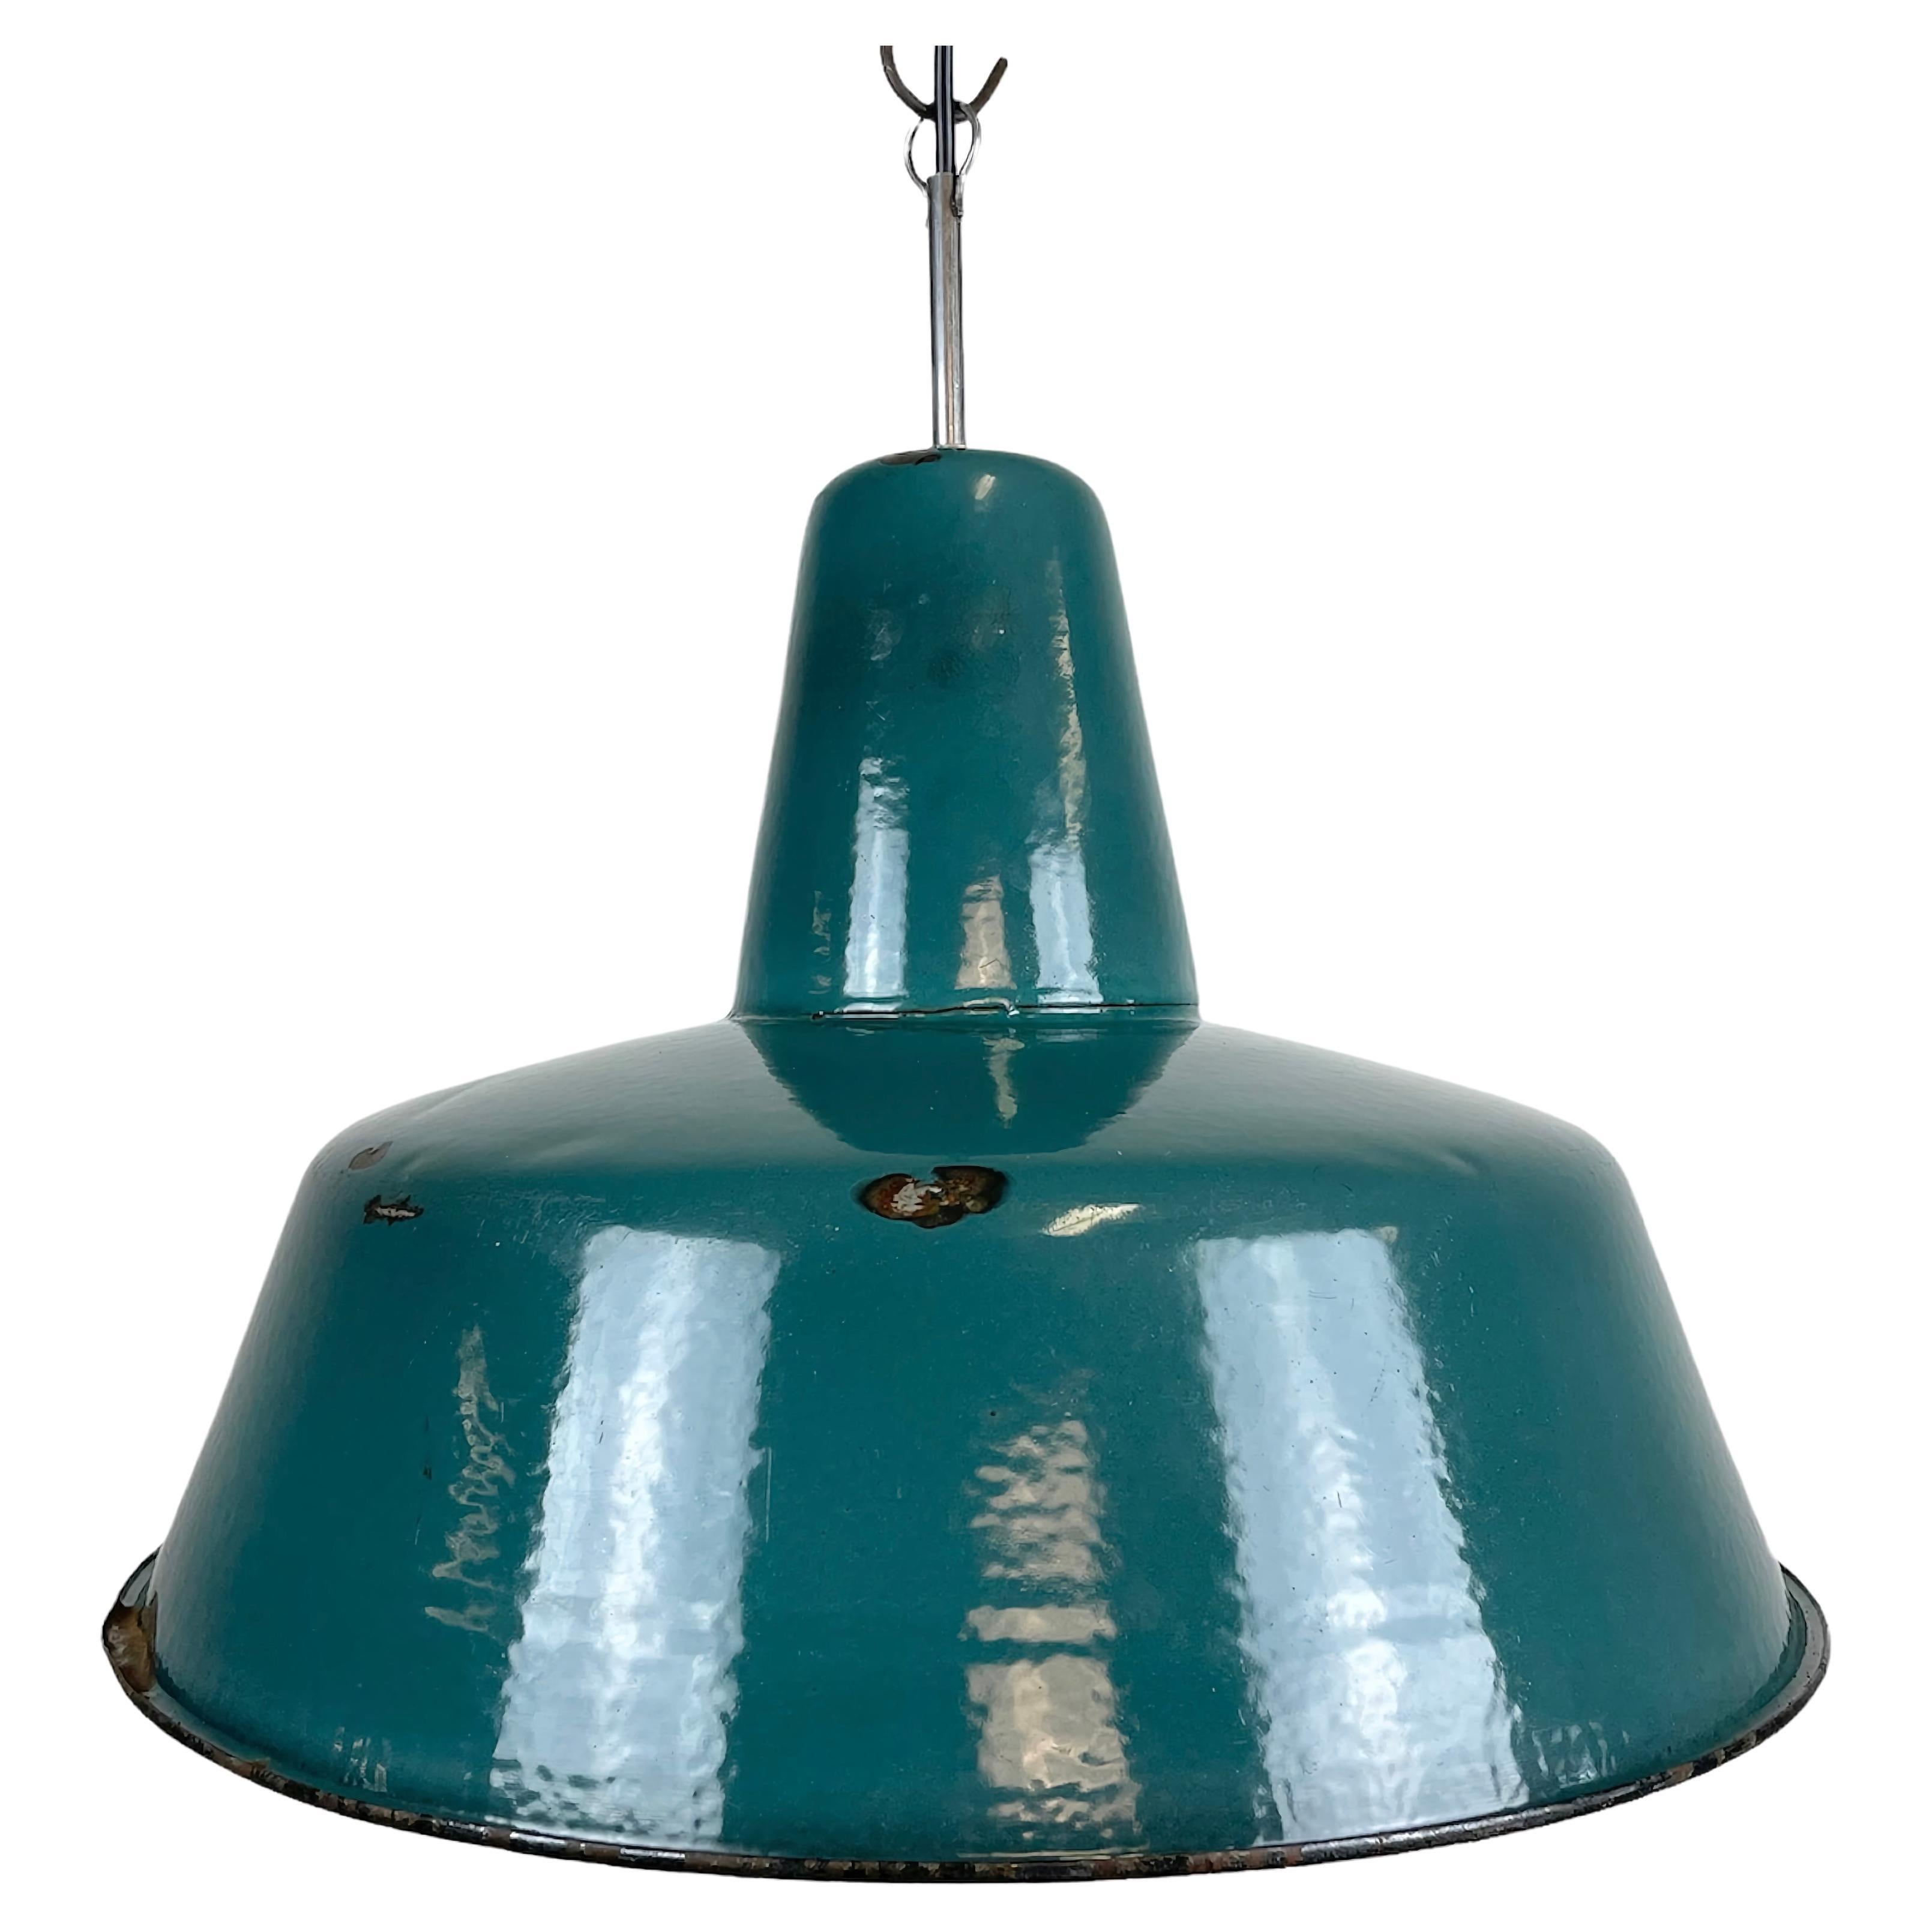  Industrial Green Enamel Factory Pendant Lamp, 1960s For Sale